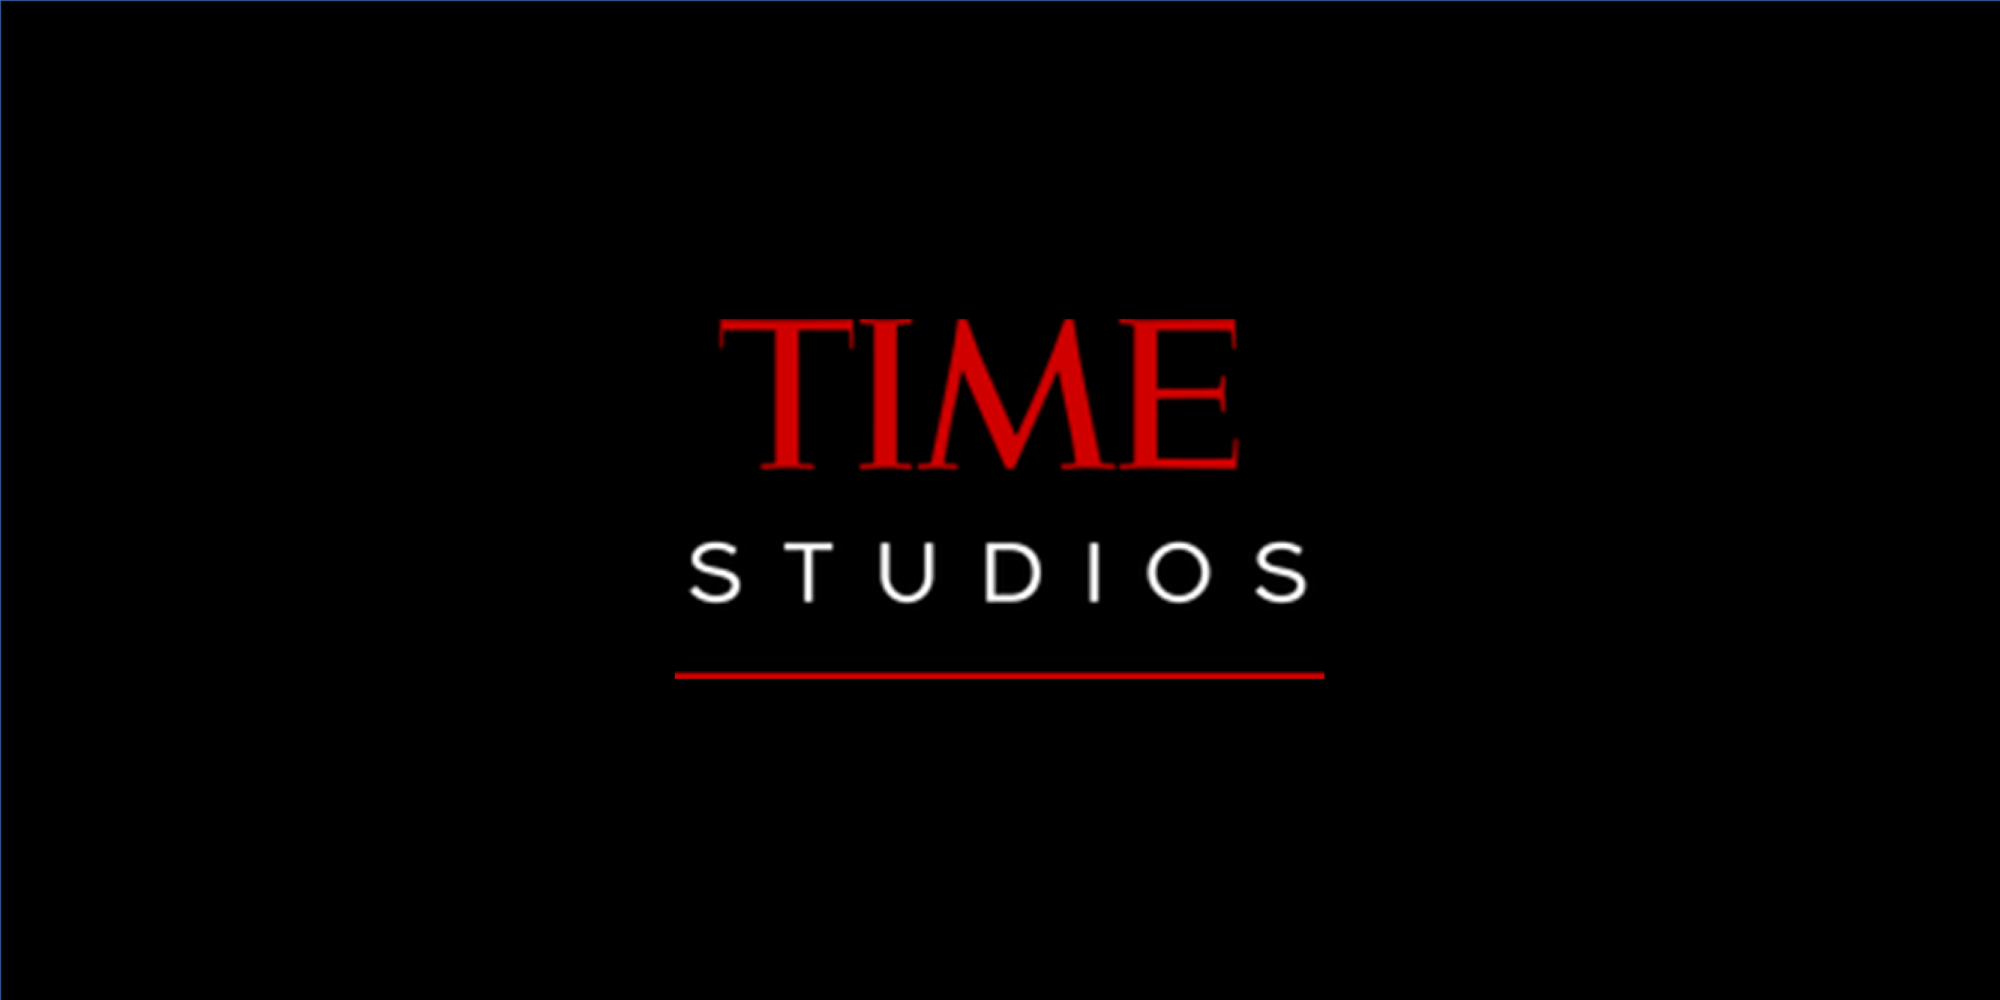 TIME Studios logo